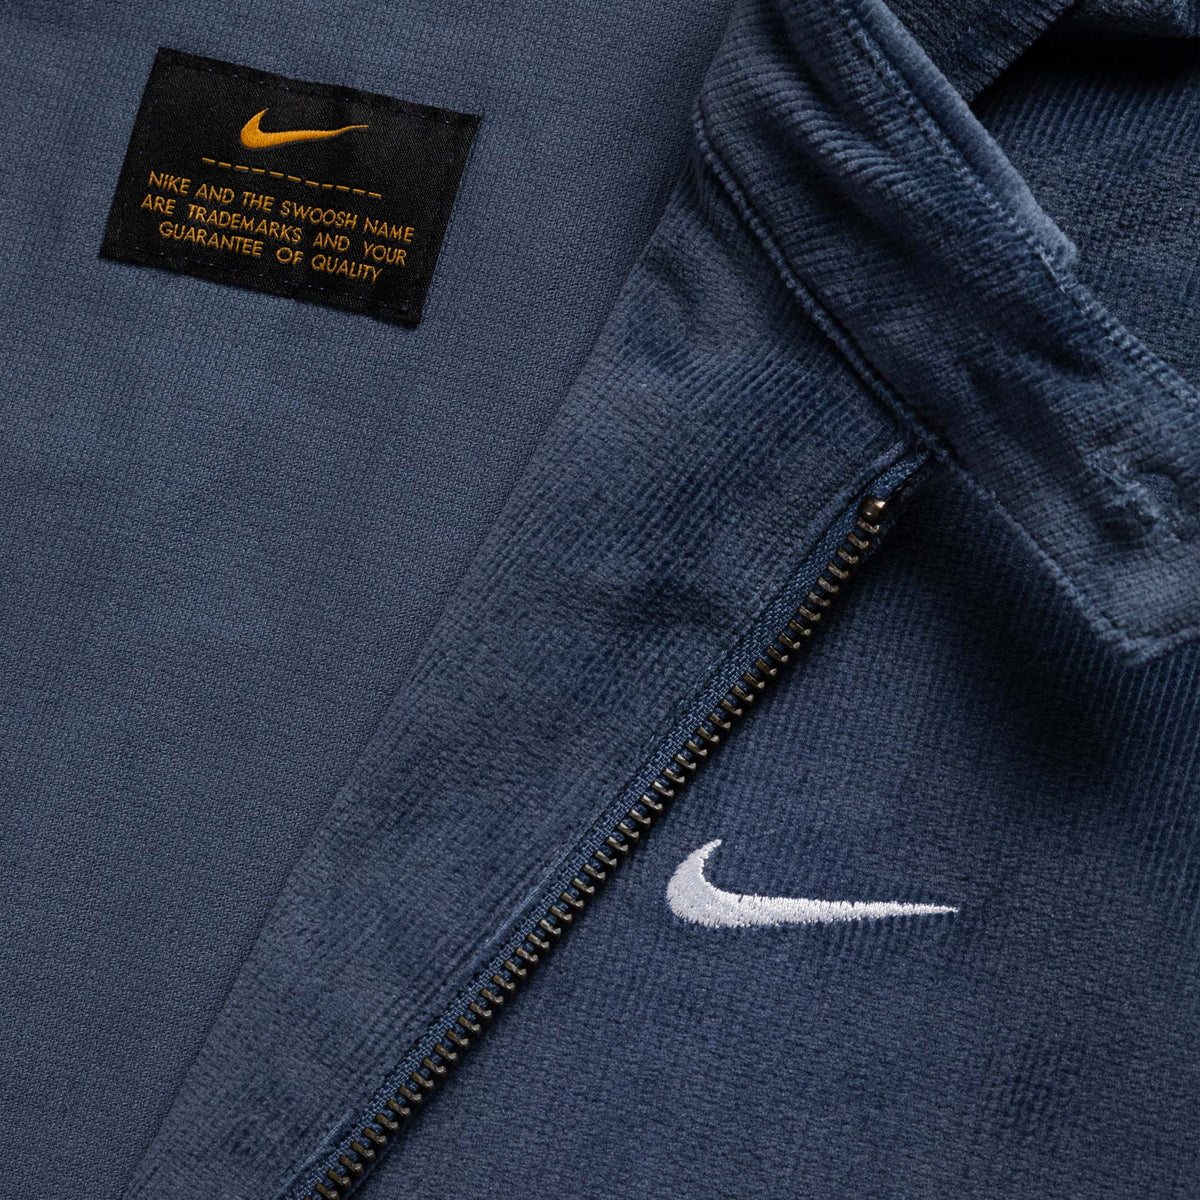 Nike Life Harrington Cord Jacket – buy now at Asphaltgold Online Store!